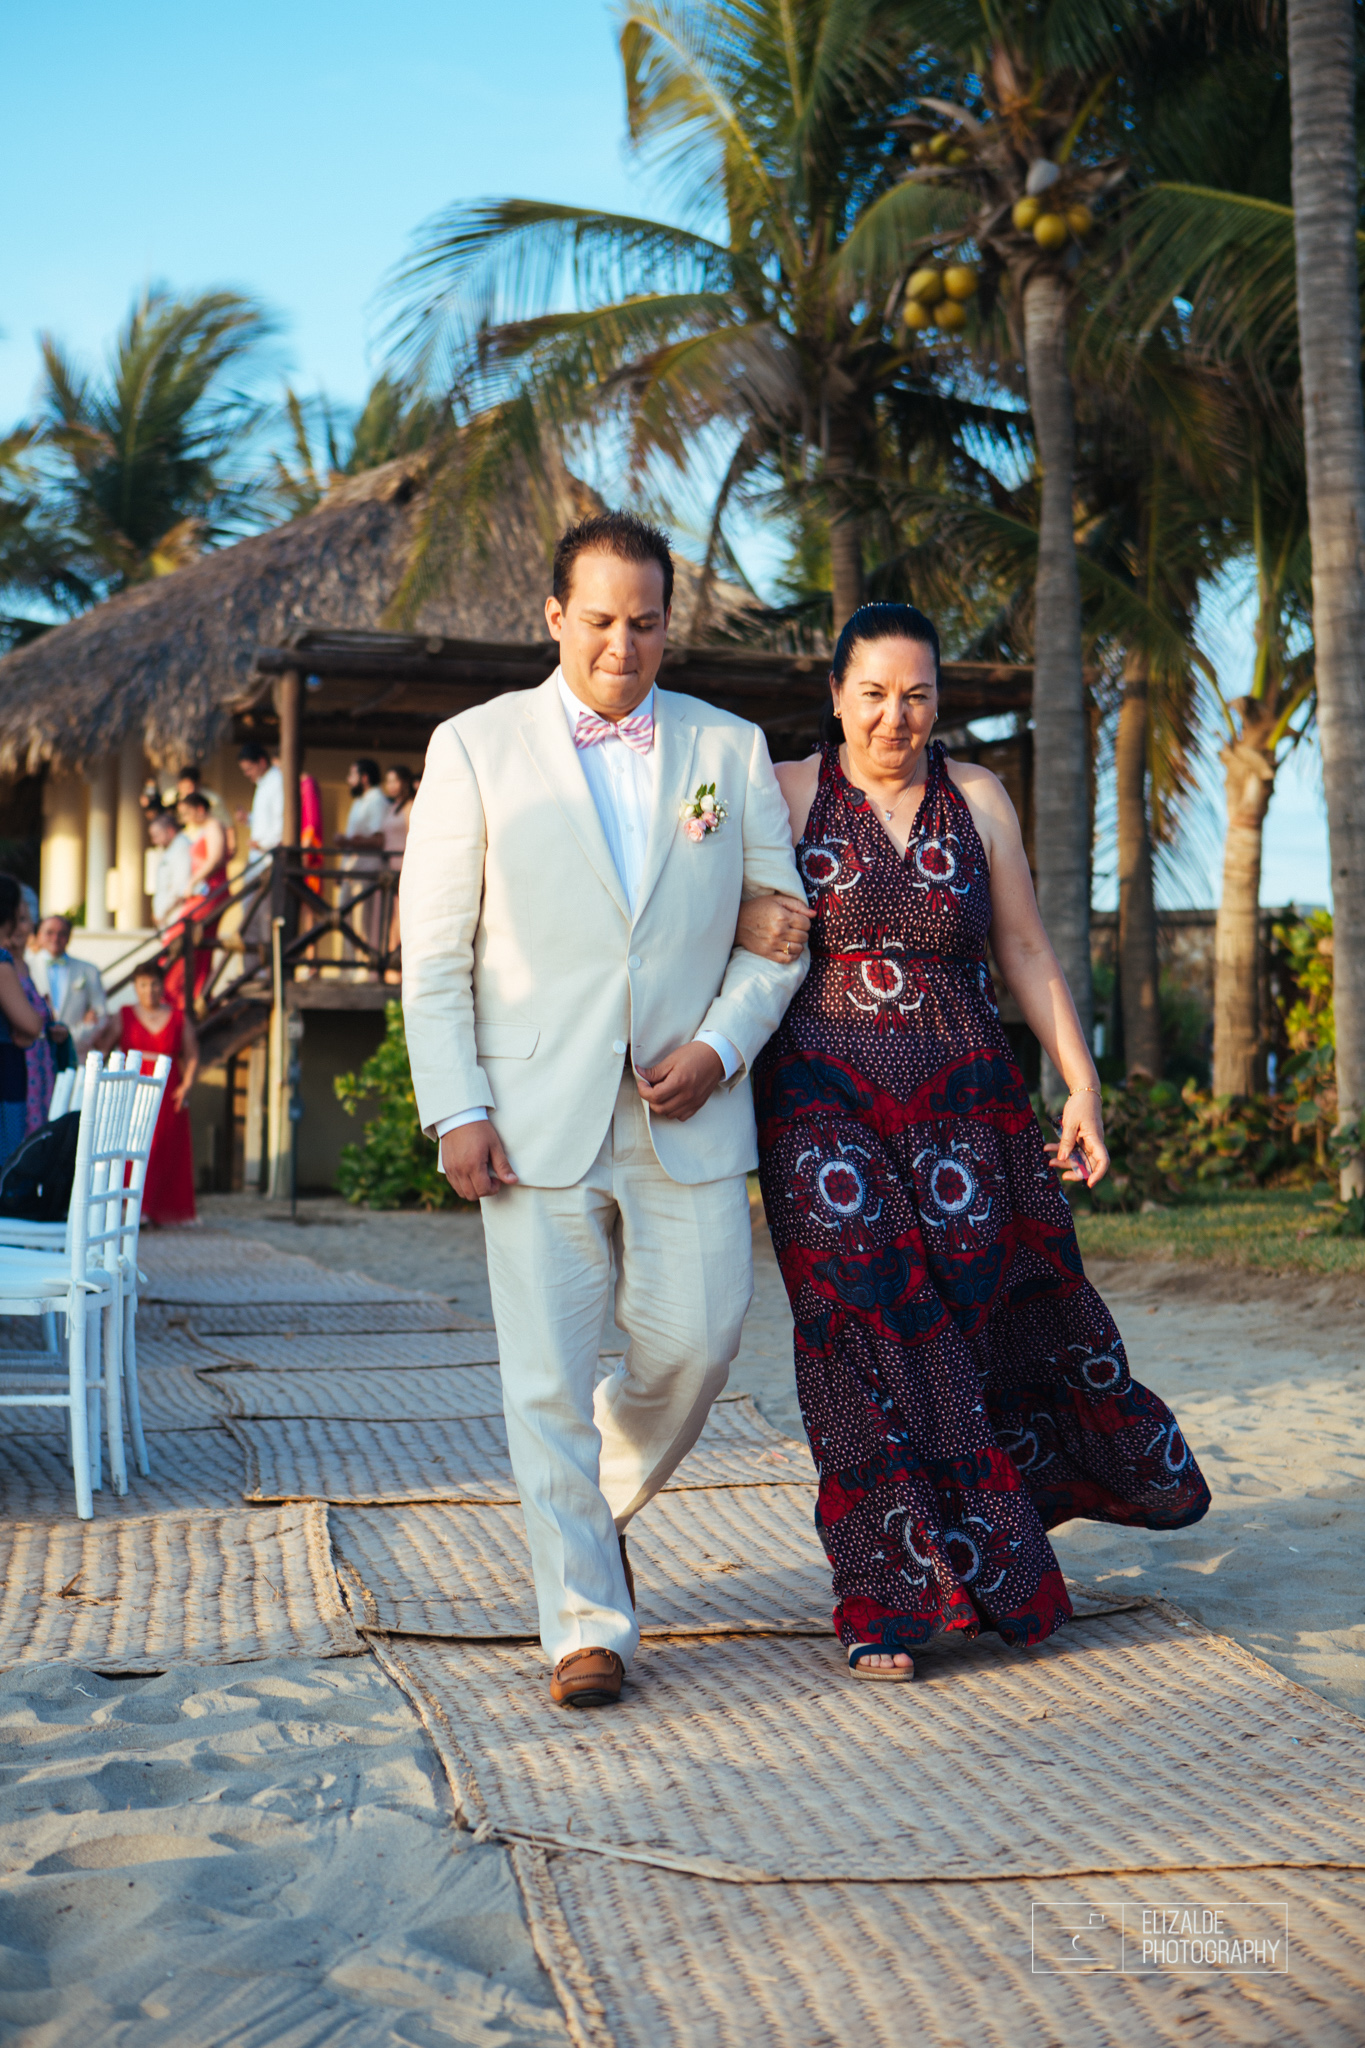 Pay and Ferran_Acapulco_Destination Wedding_Elizalde Photography-75.jpg